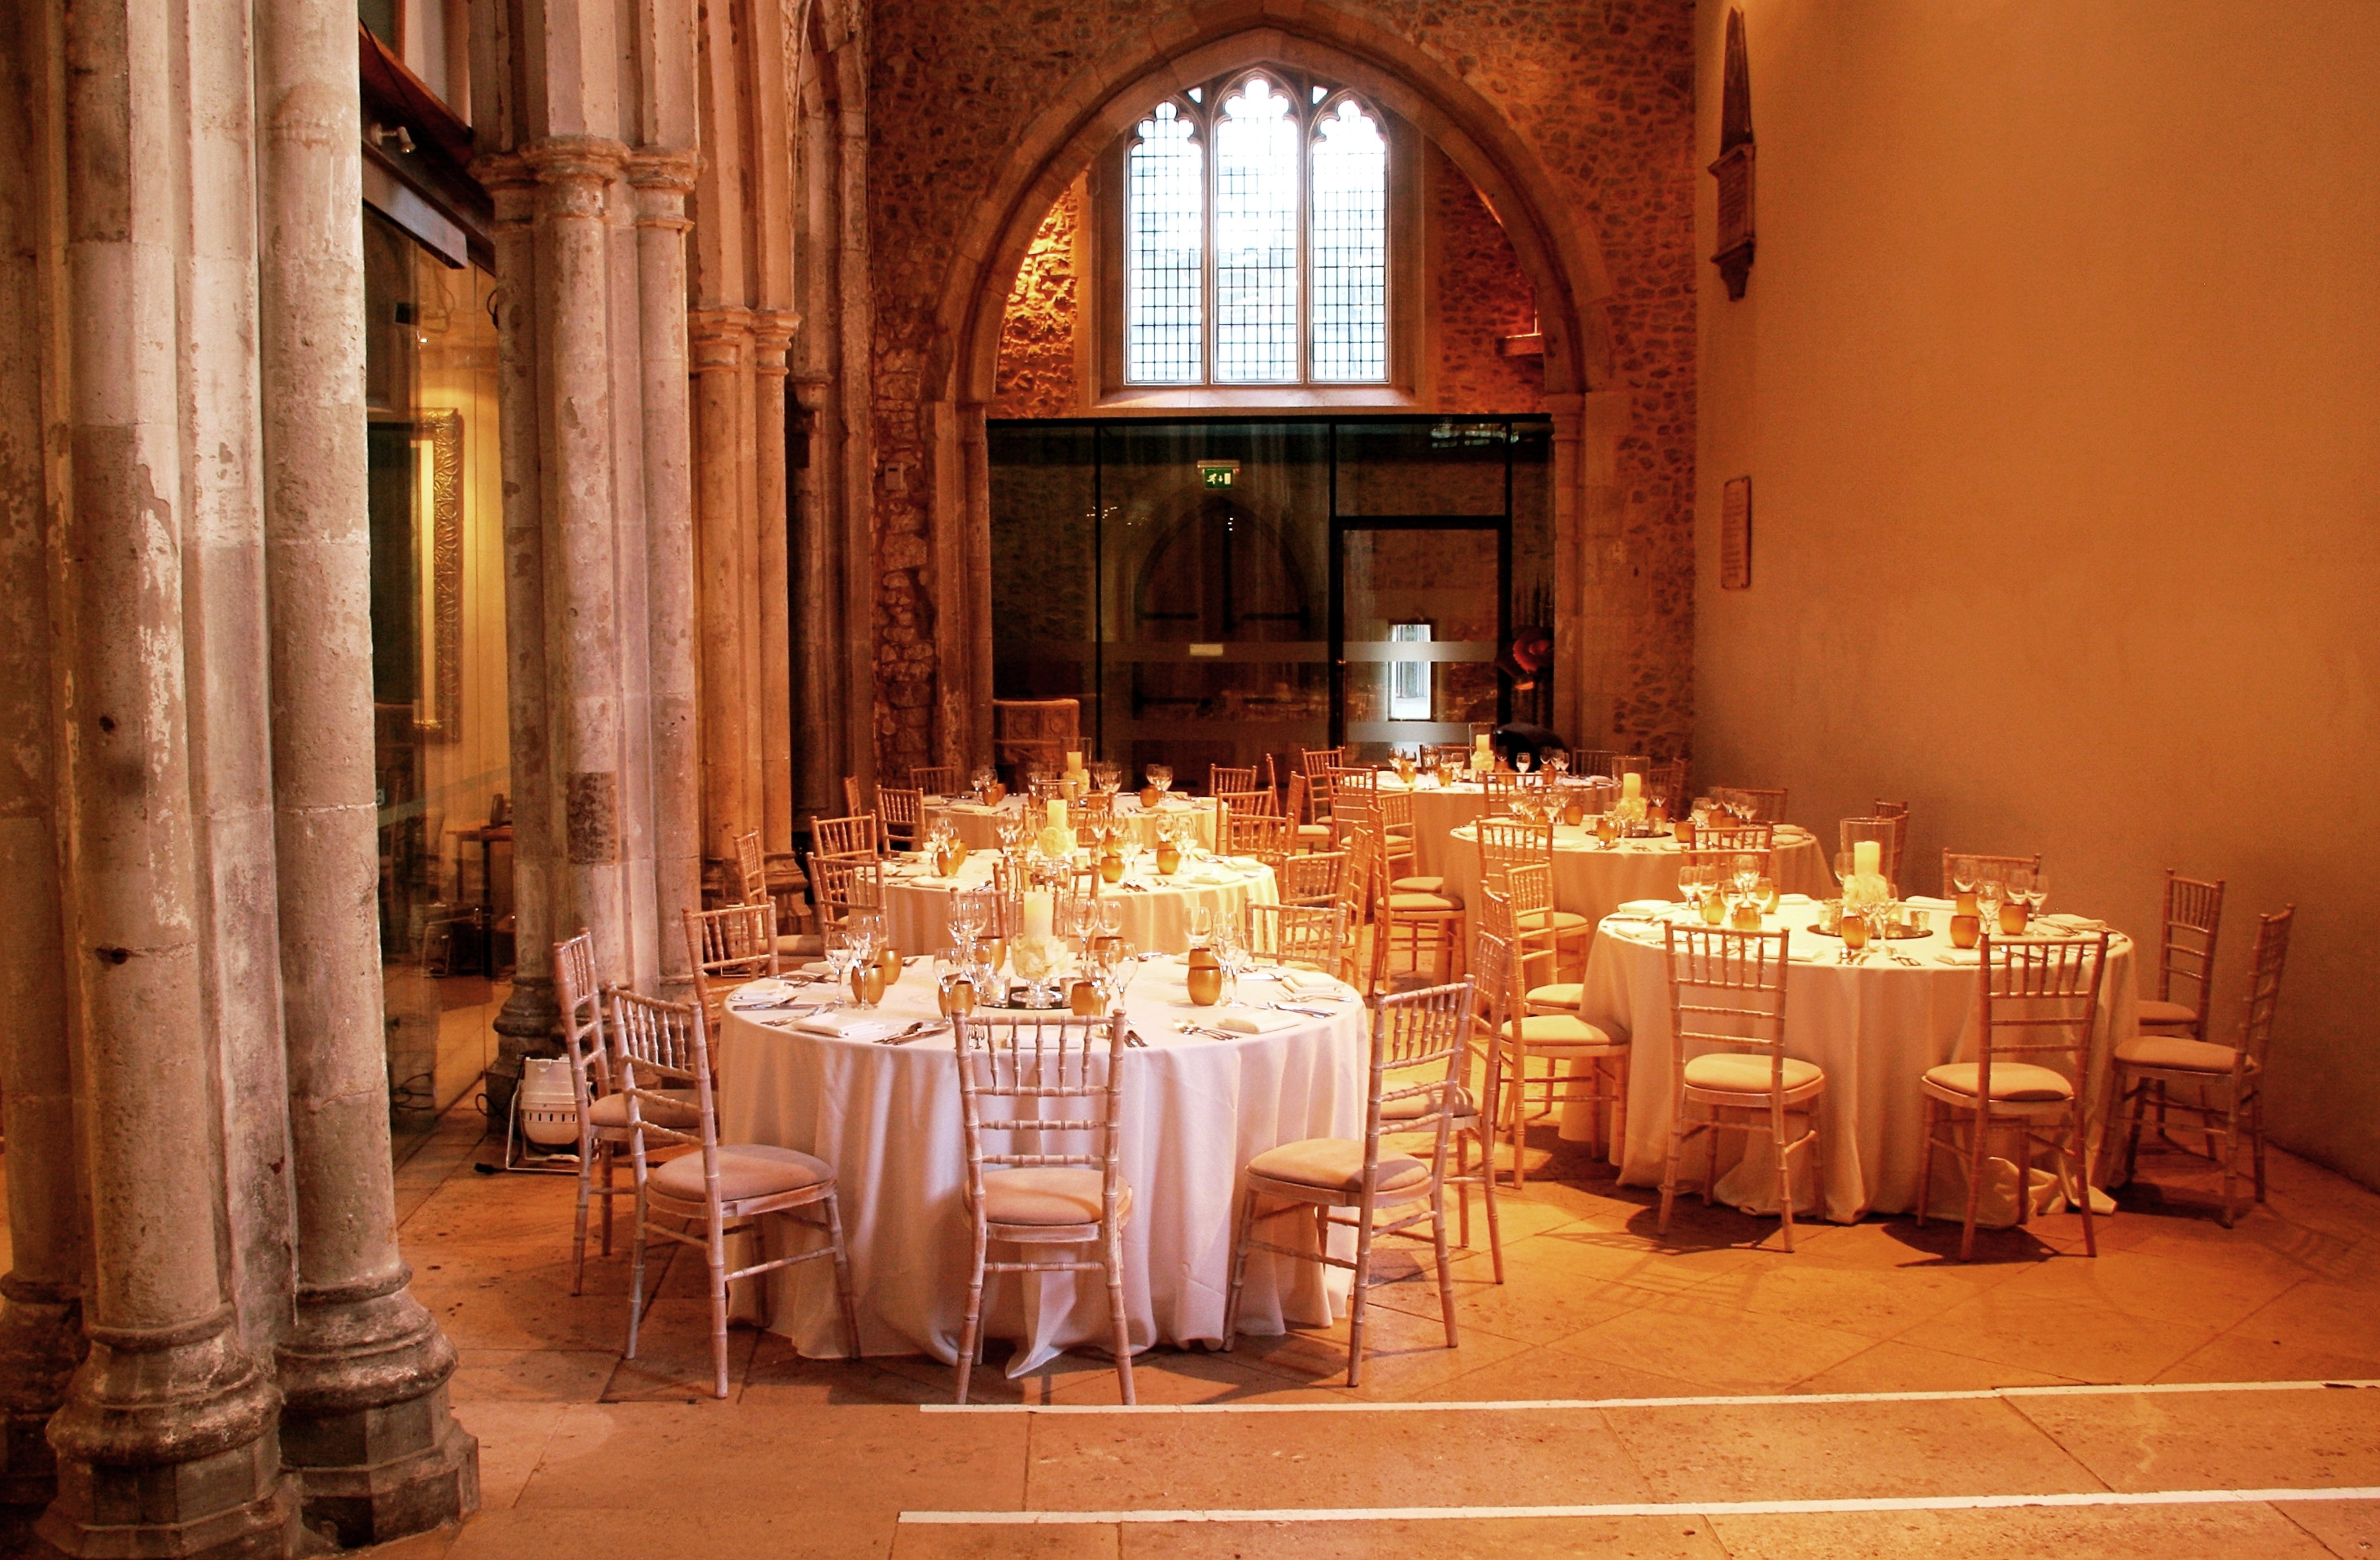 78 bishopsgate, intimate wedding venue london, small wedding venue london, affordable wedding venue london 